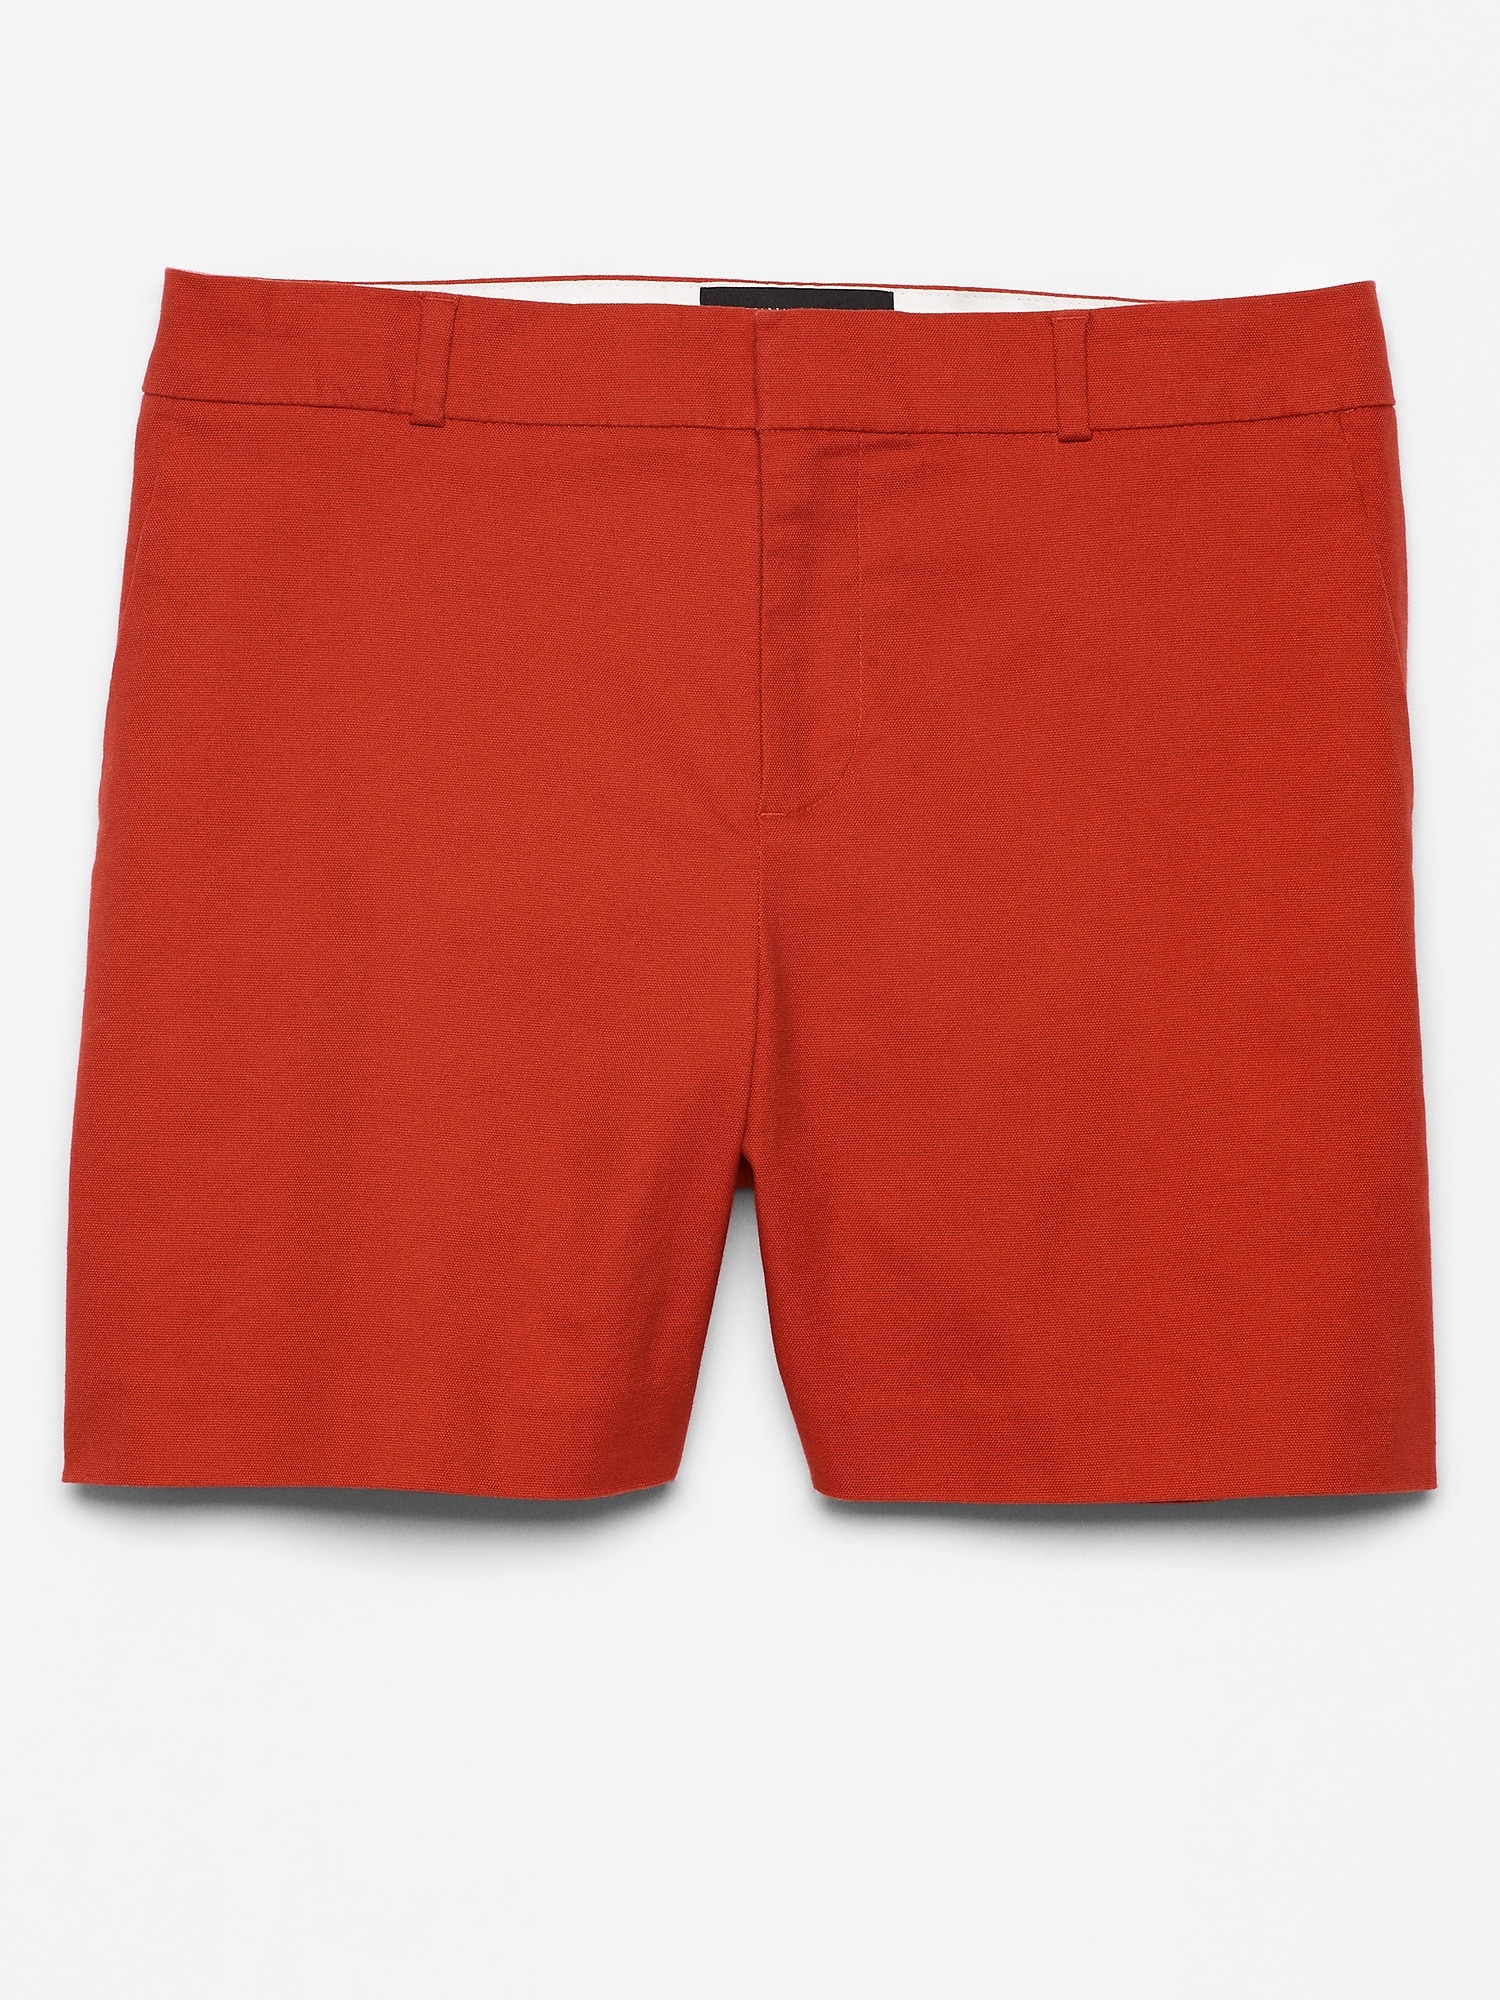 Pique Tailored Shorts - 5 inch inseam